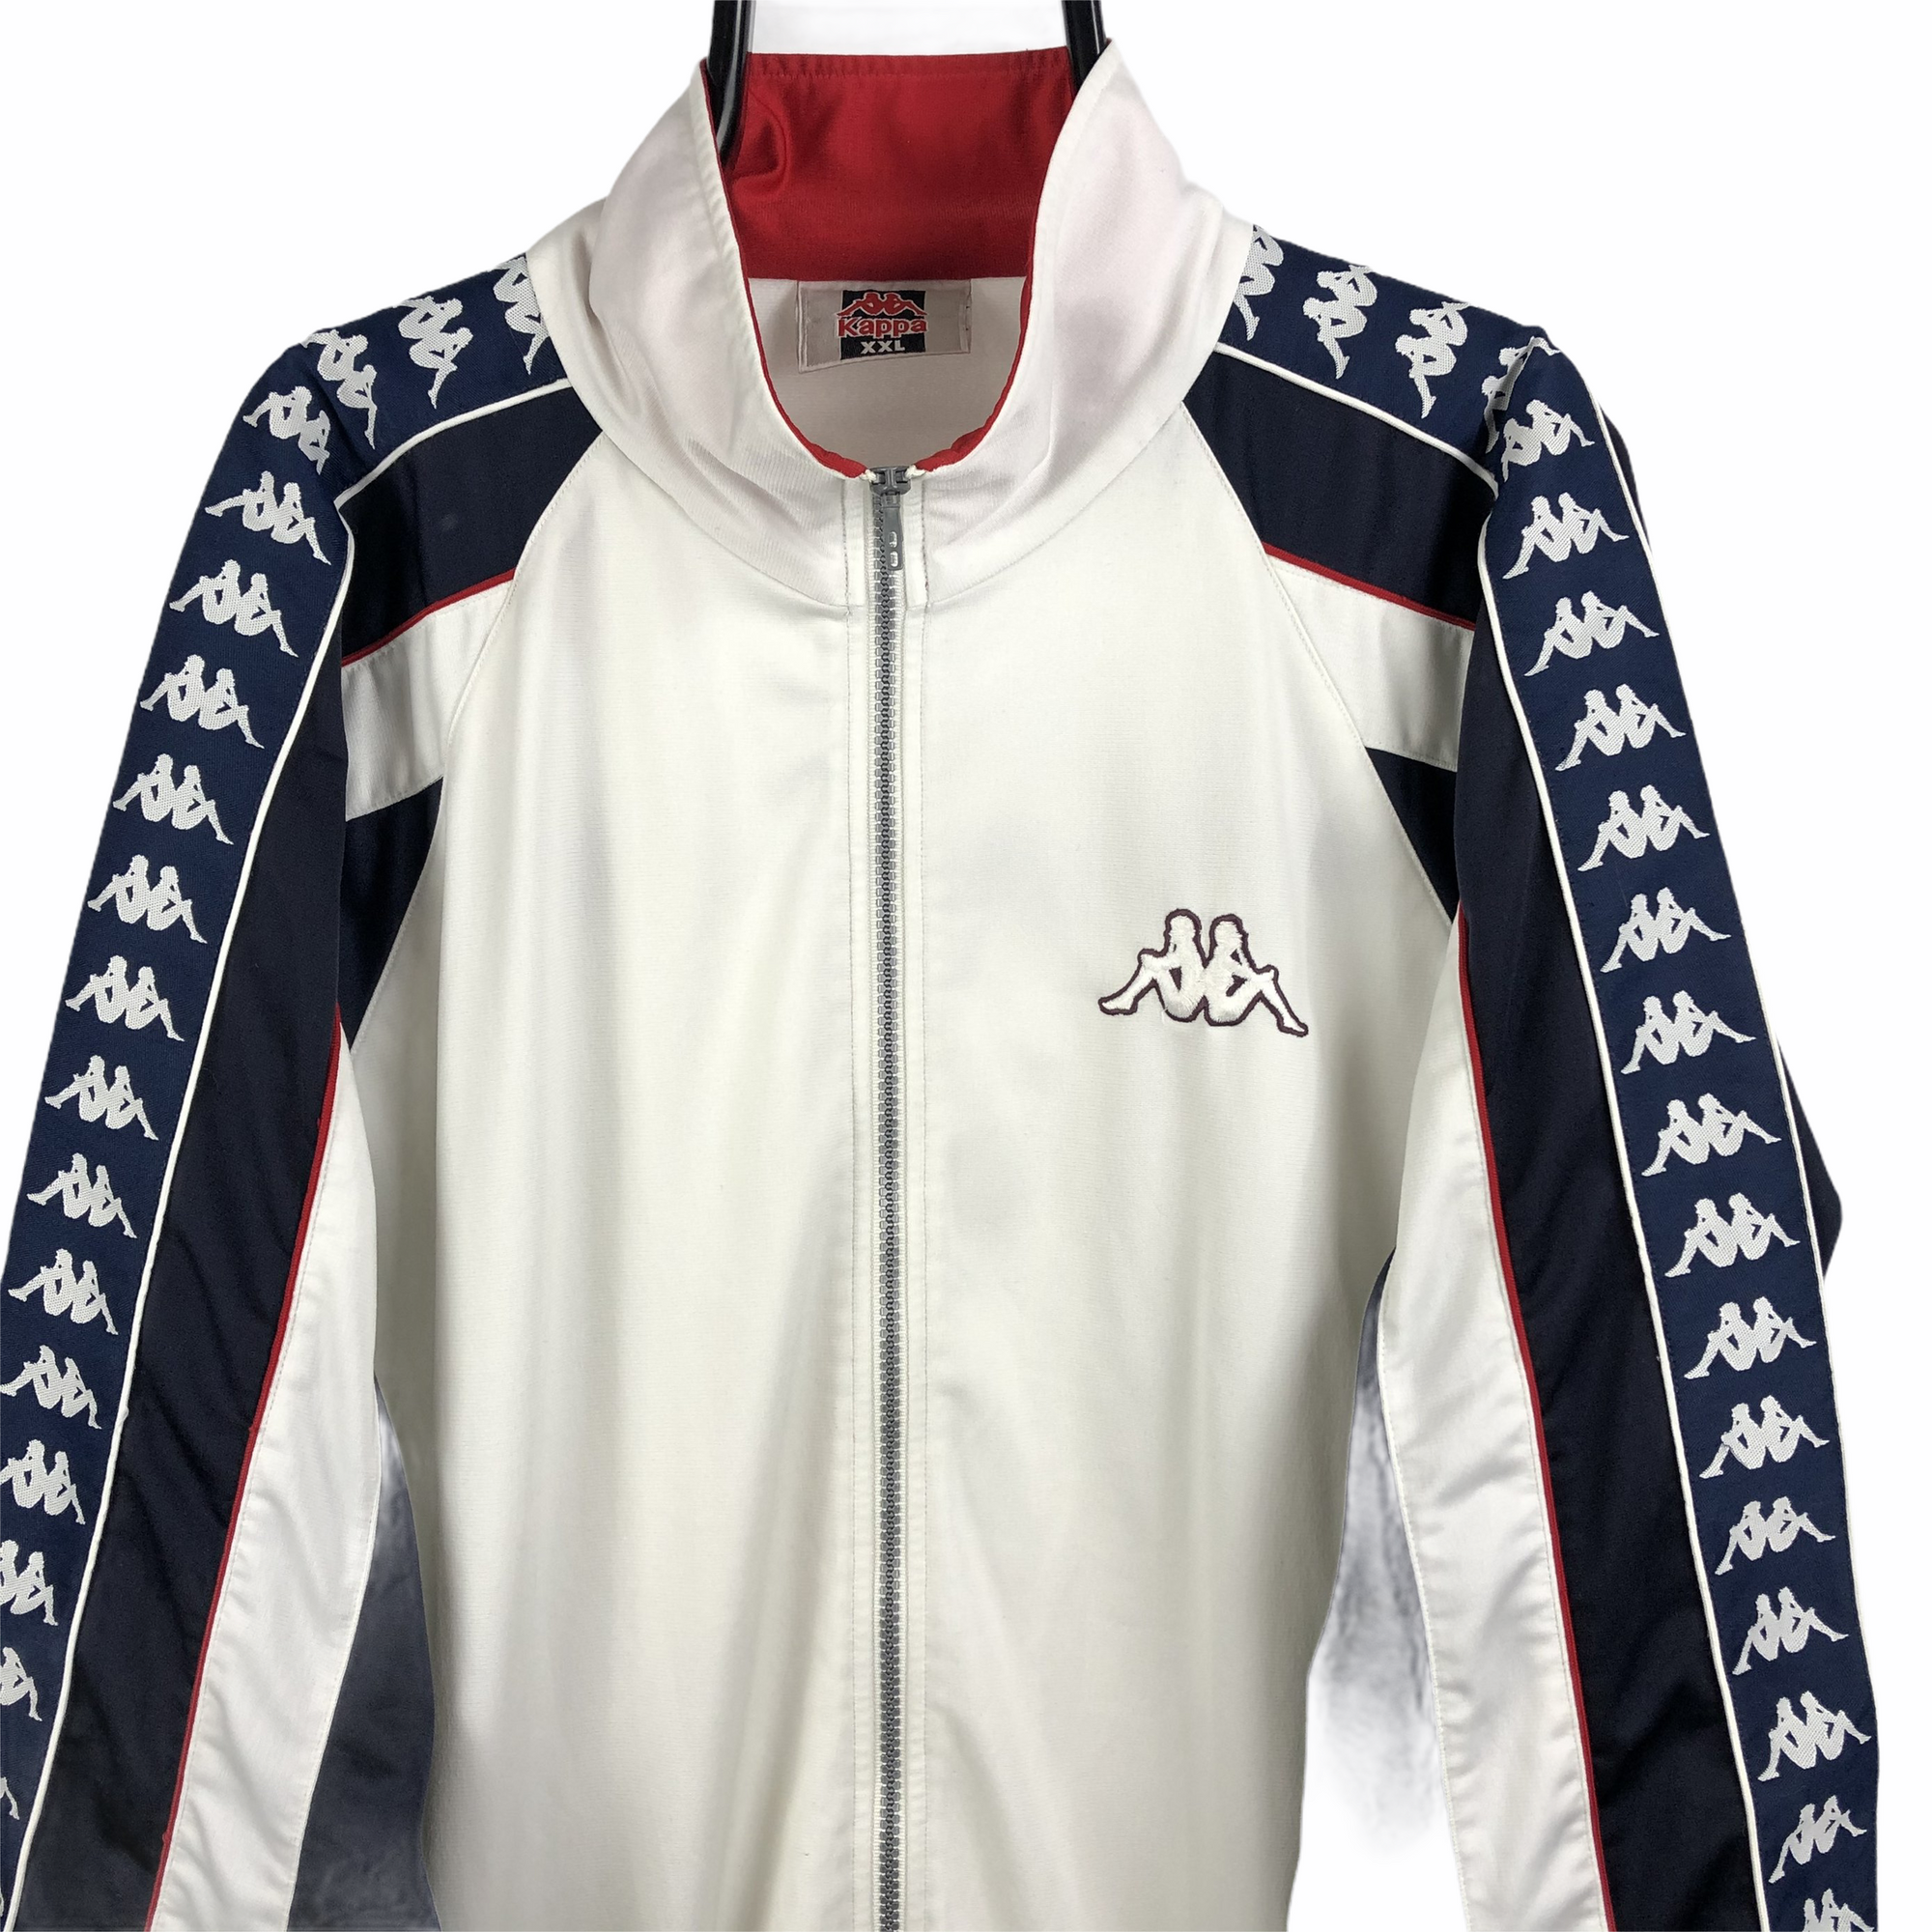 Vintage Kappa Track Jacket in White/Navy - Men's XL/Women's XXL